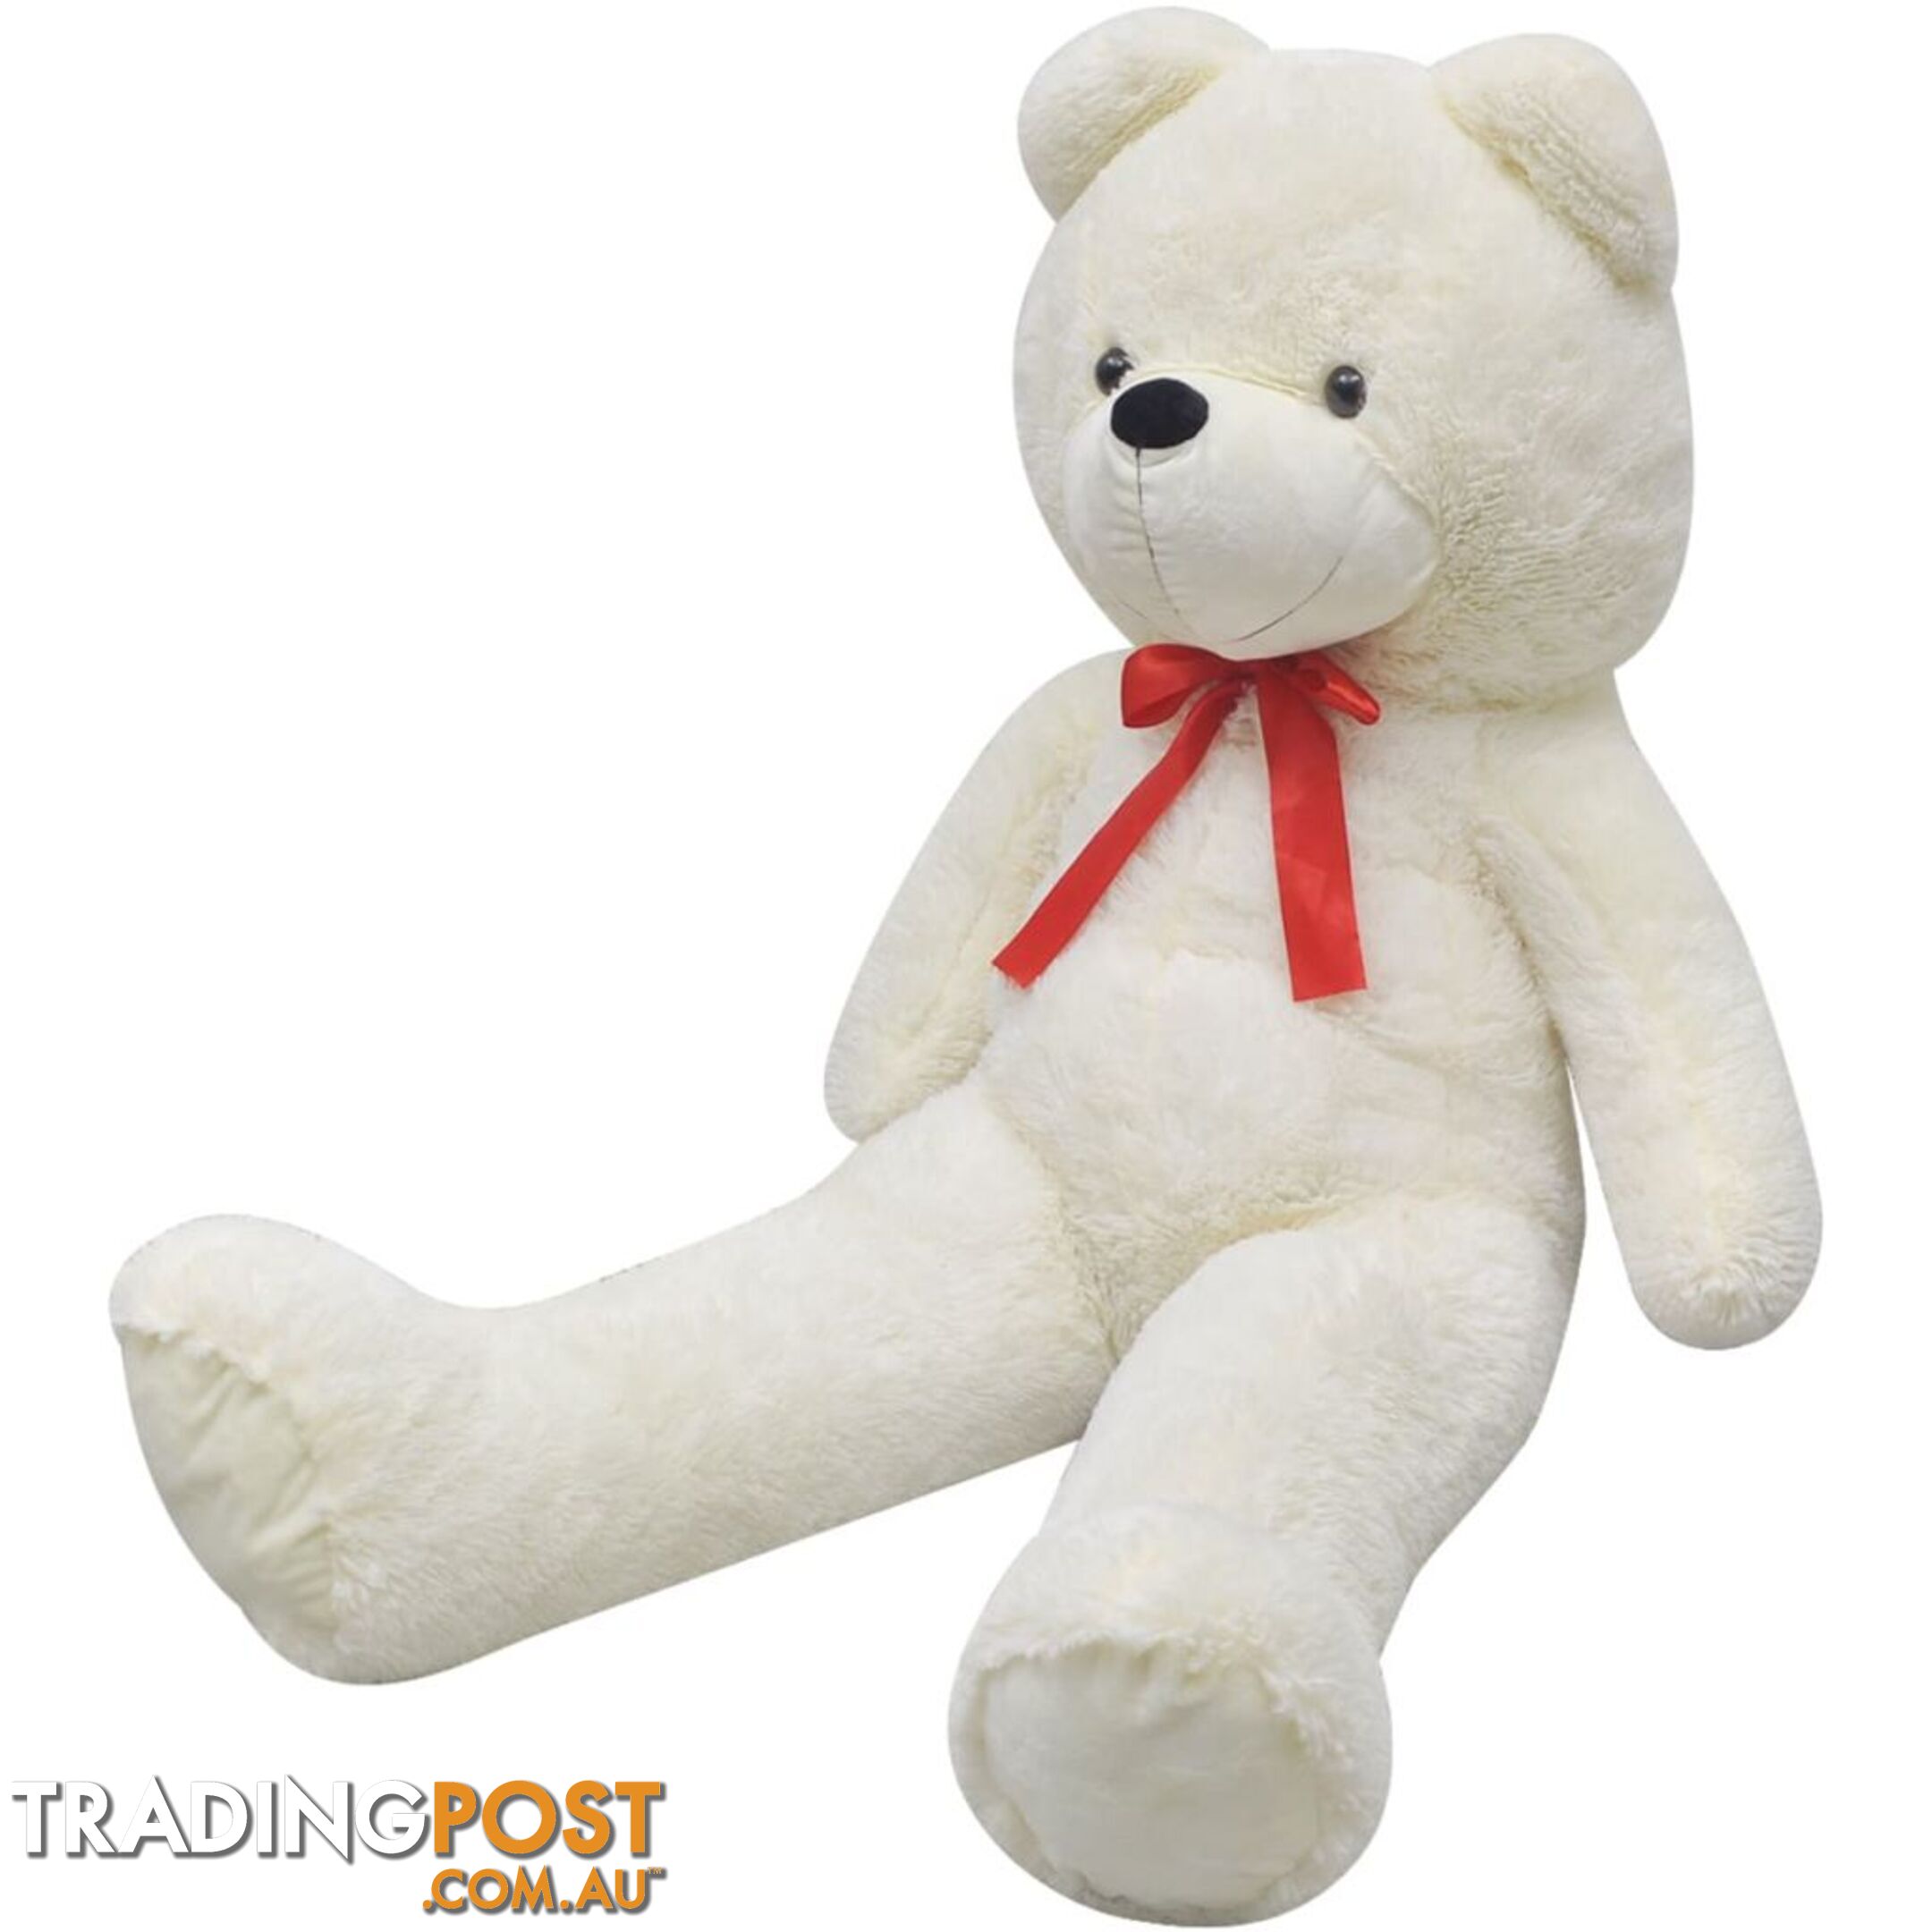 XXL Soft Plush Teddy Bear 175 Cm - White - Unbranded - 4326500420152